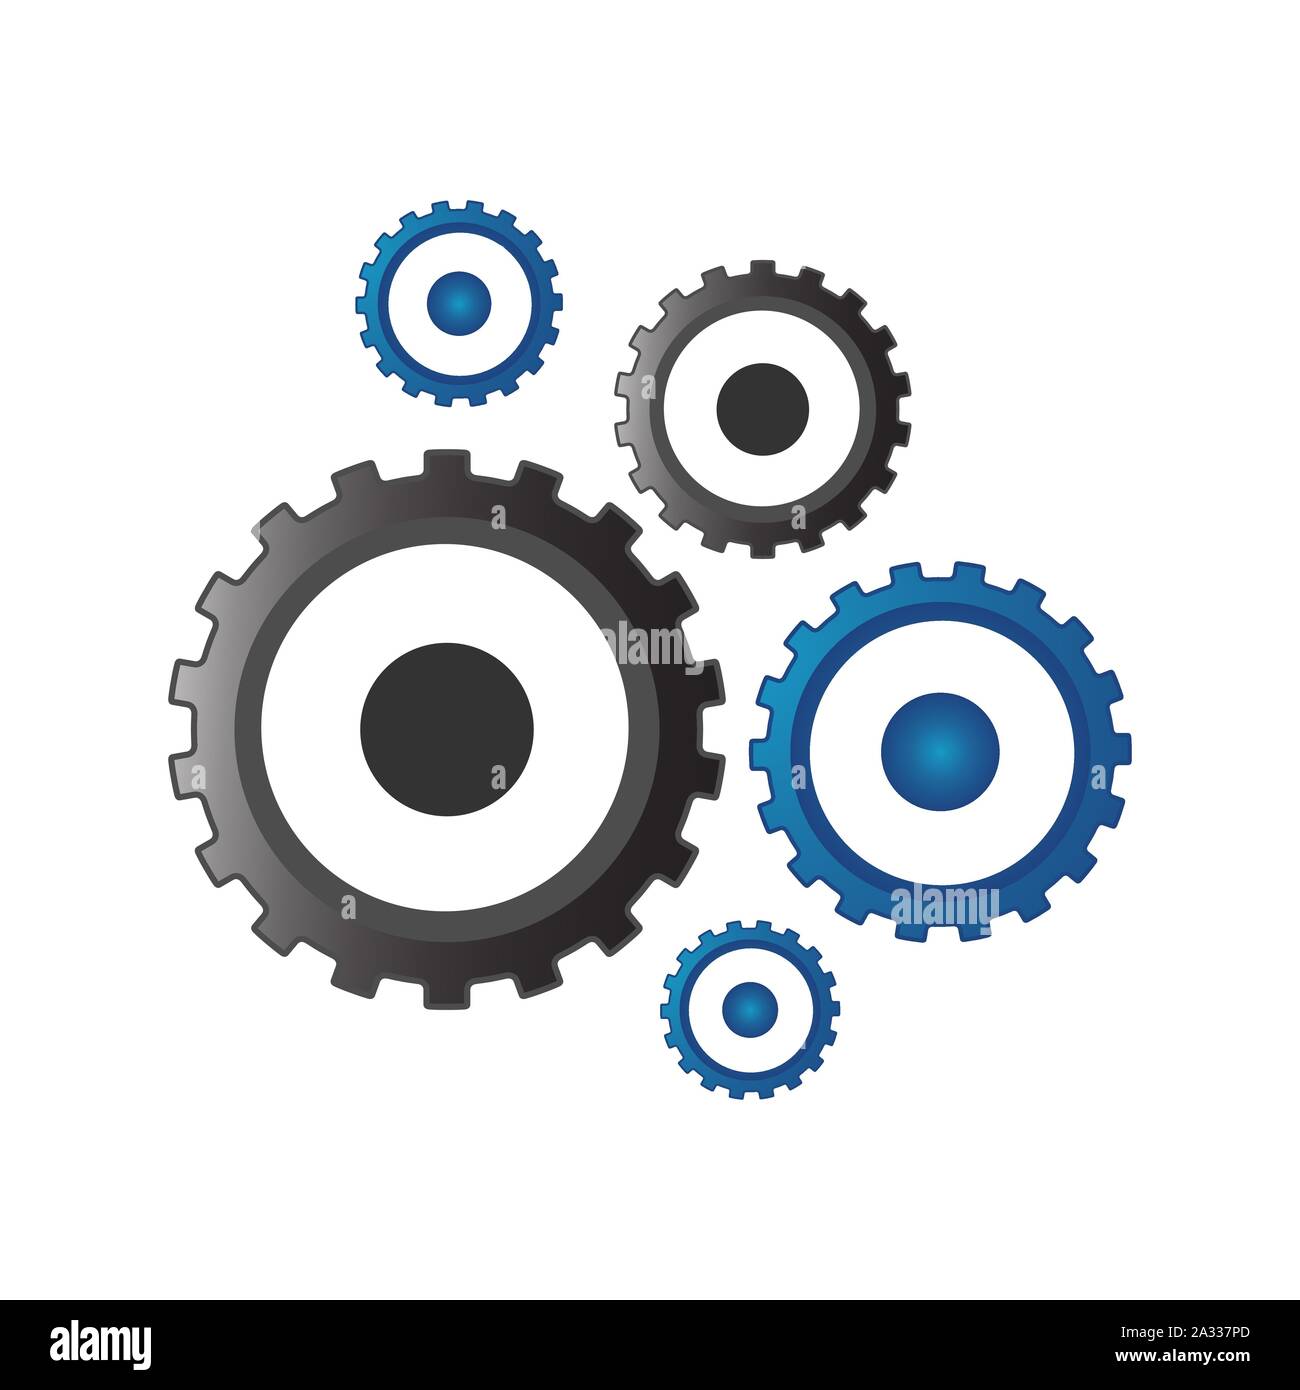 Gear wheels teamwork Stock Vector Images - Alamy